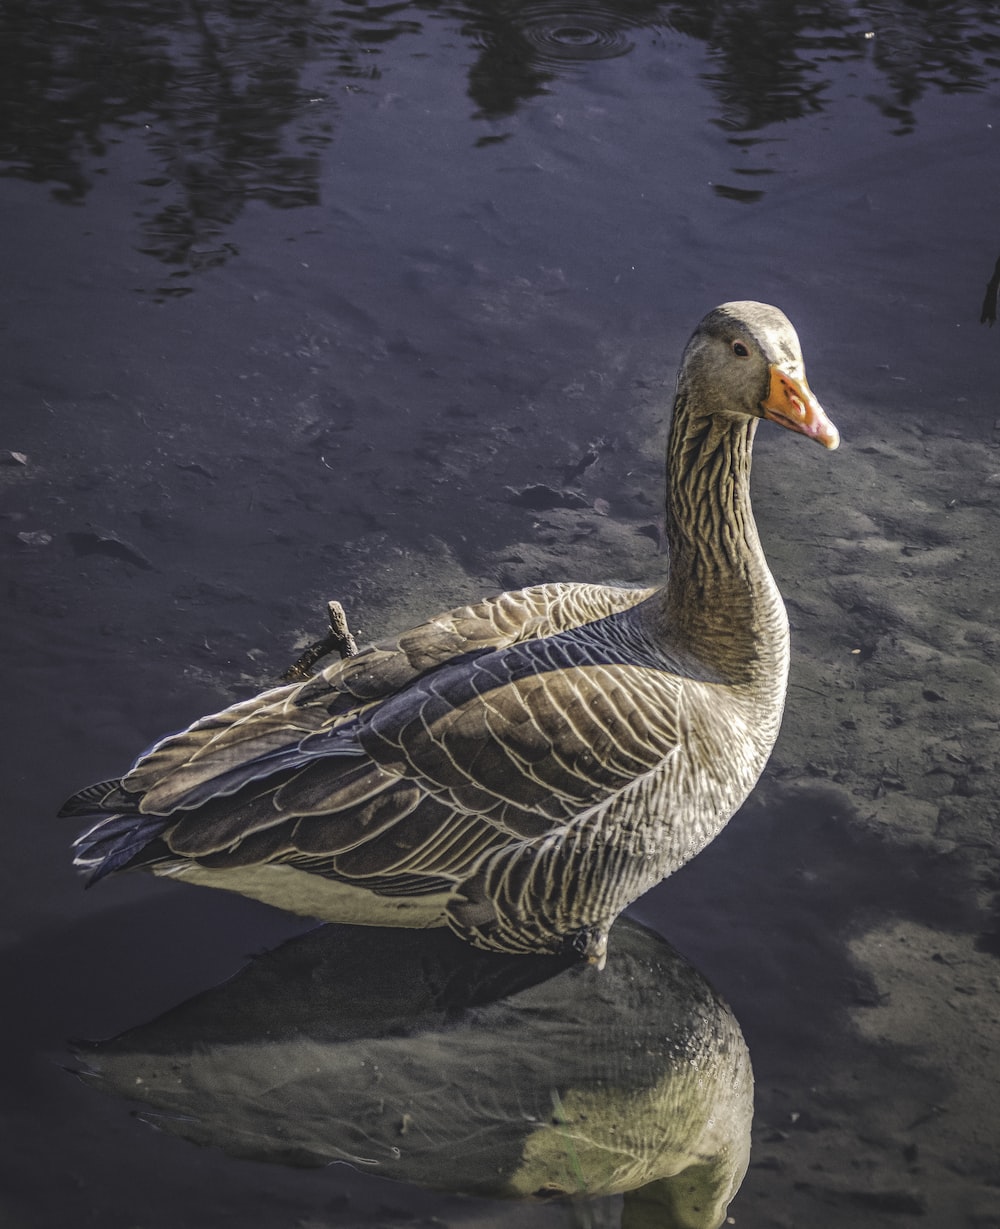 a duck on a rock in water